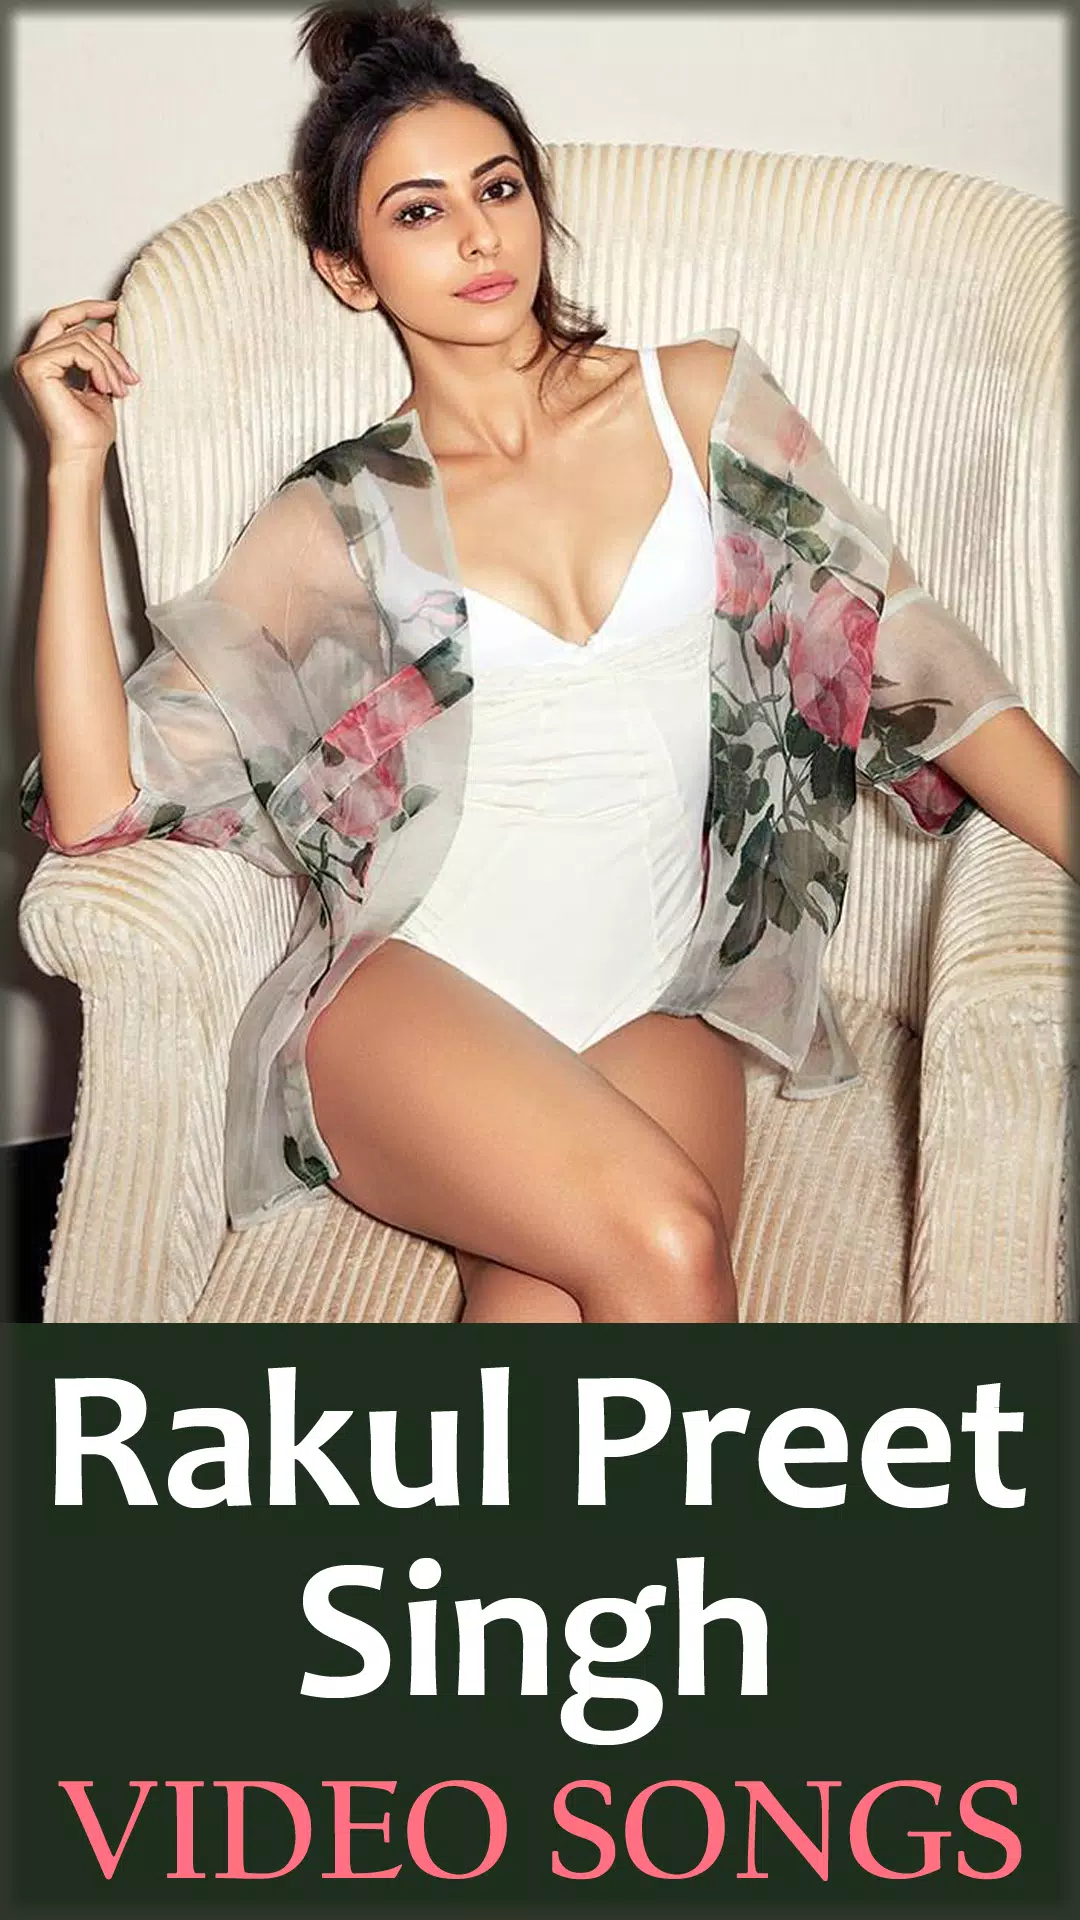 Rakul Preet Singh Sex Videos - Rakul Preet Singh Hot Hd Video Songs App APK for Android Download